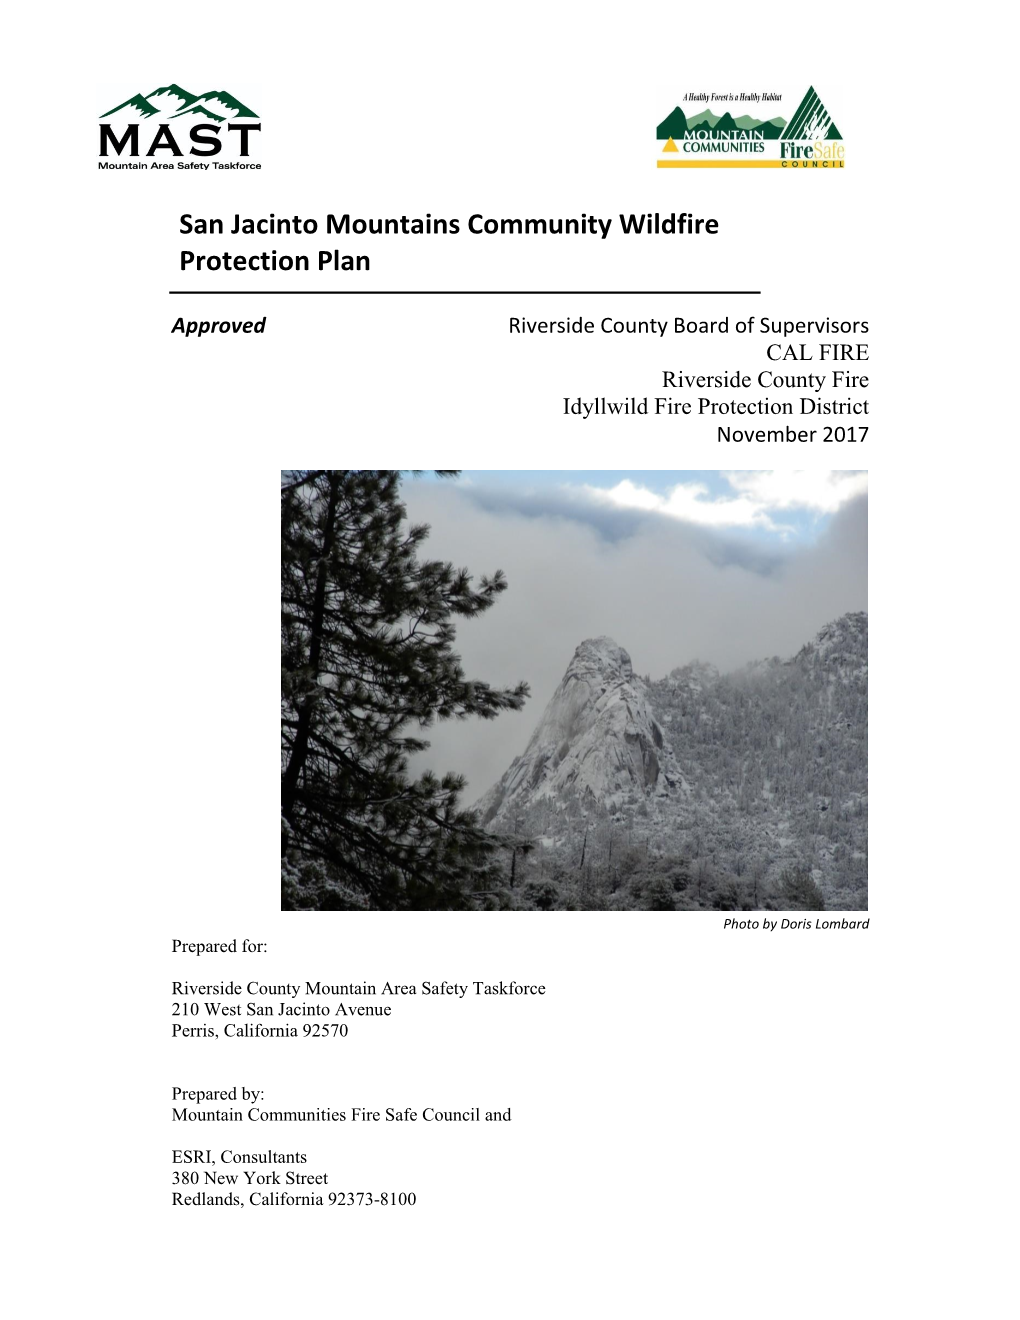 San Jacinto Mountains Community Wildfire Protection Plan